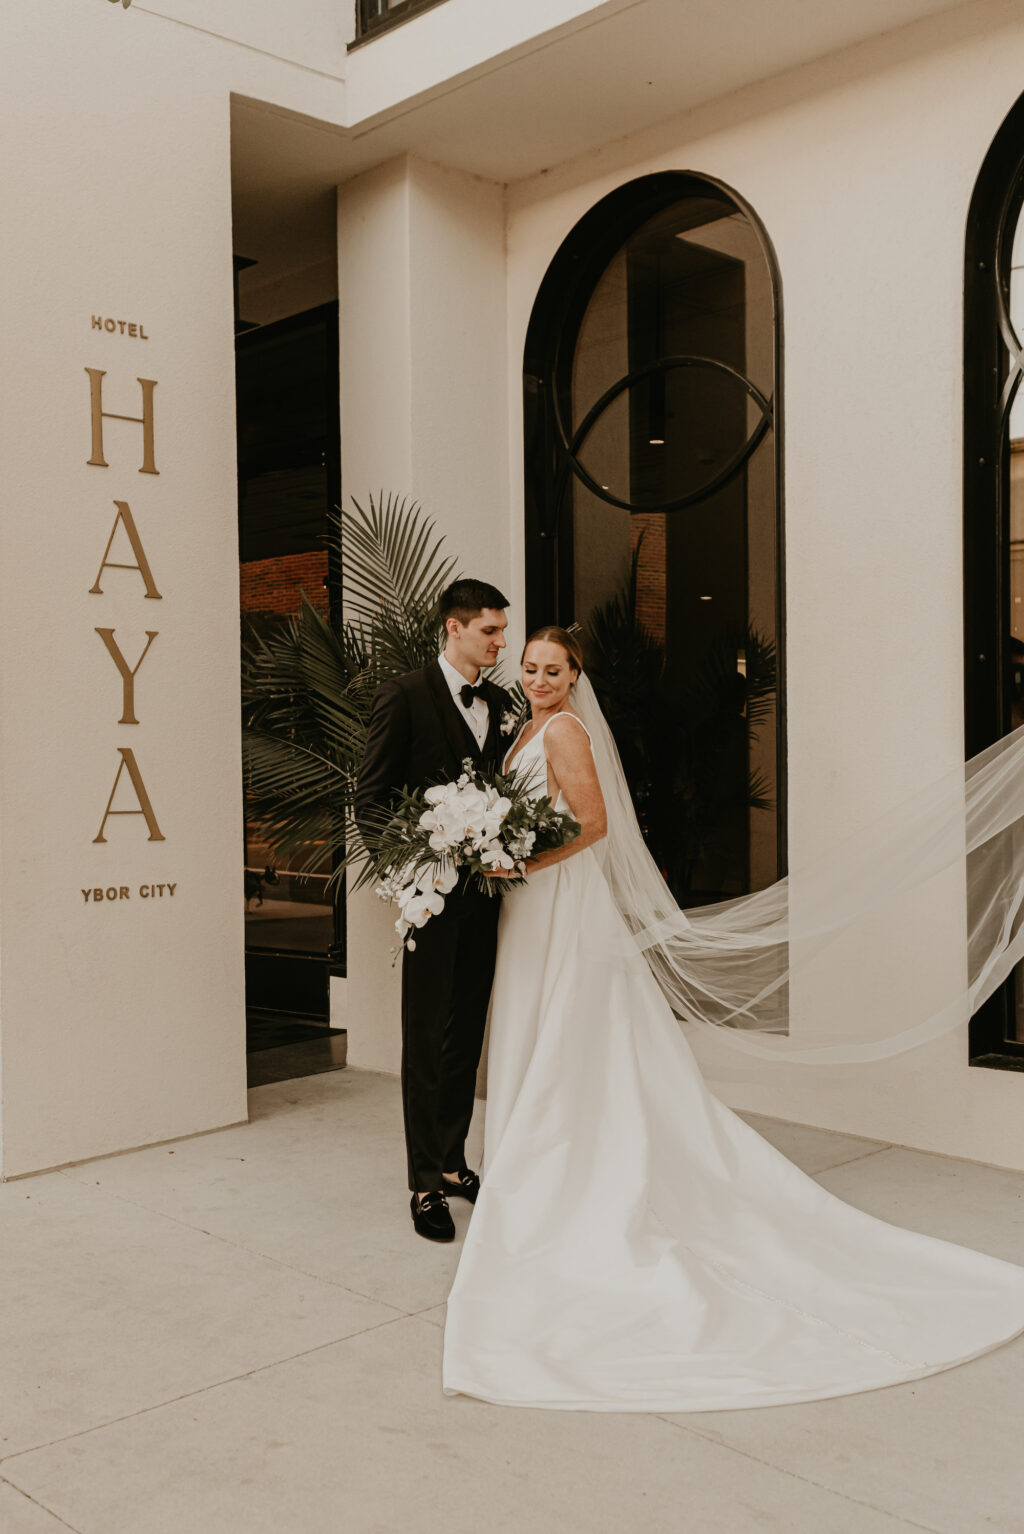 Romantic Bride and Groom Wedding Portrait | Tampa Bay Florist Monarch Events and Design | Planner Coastal Coordinating | Historic Boutique Venue Hotel Haya